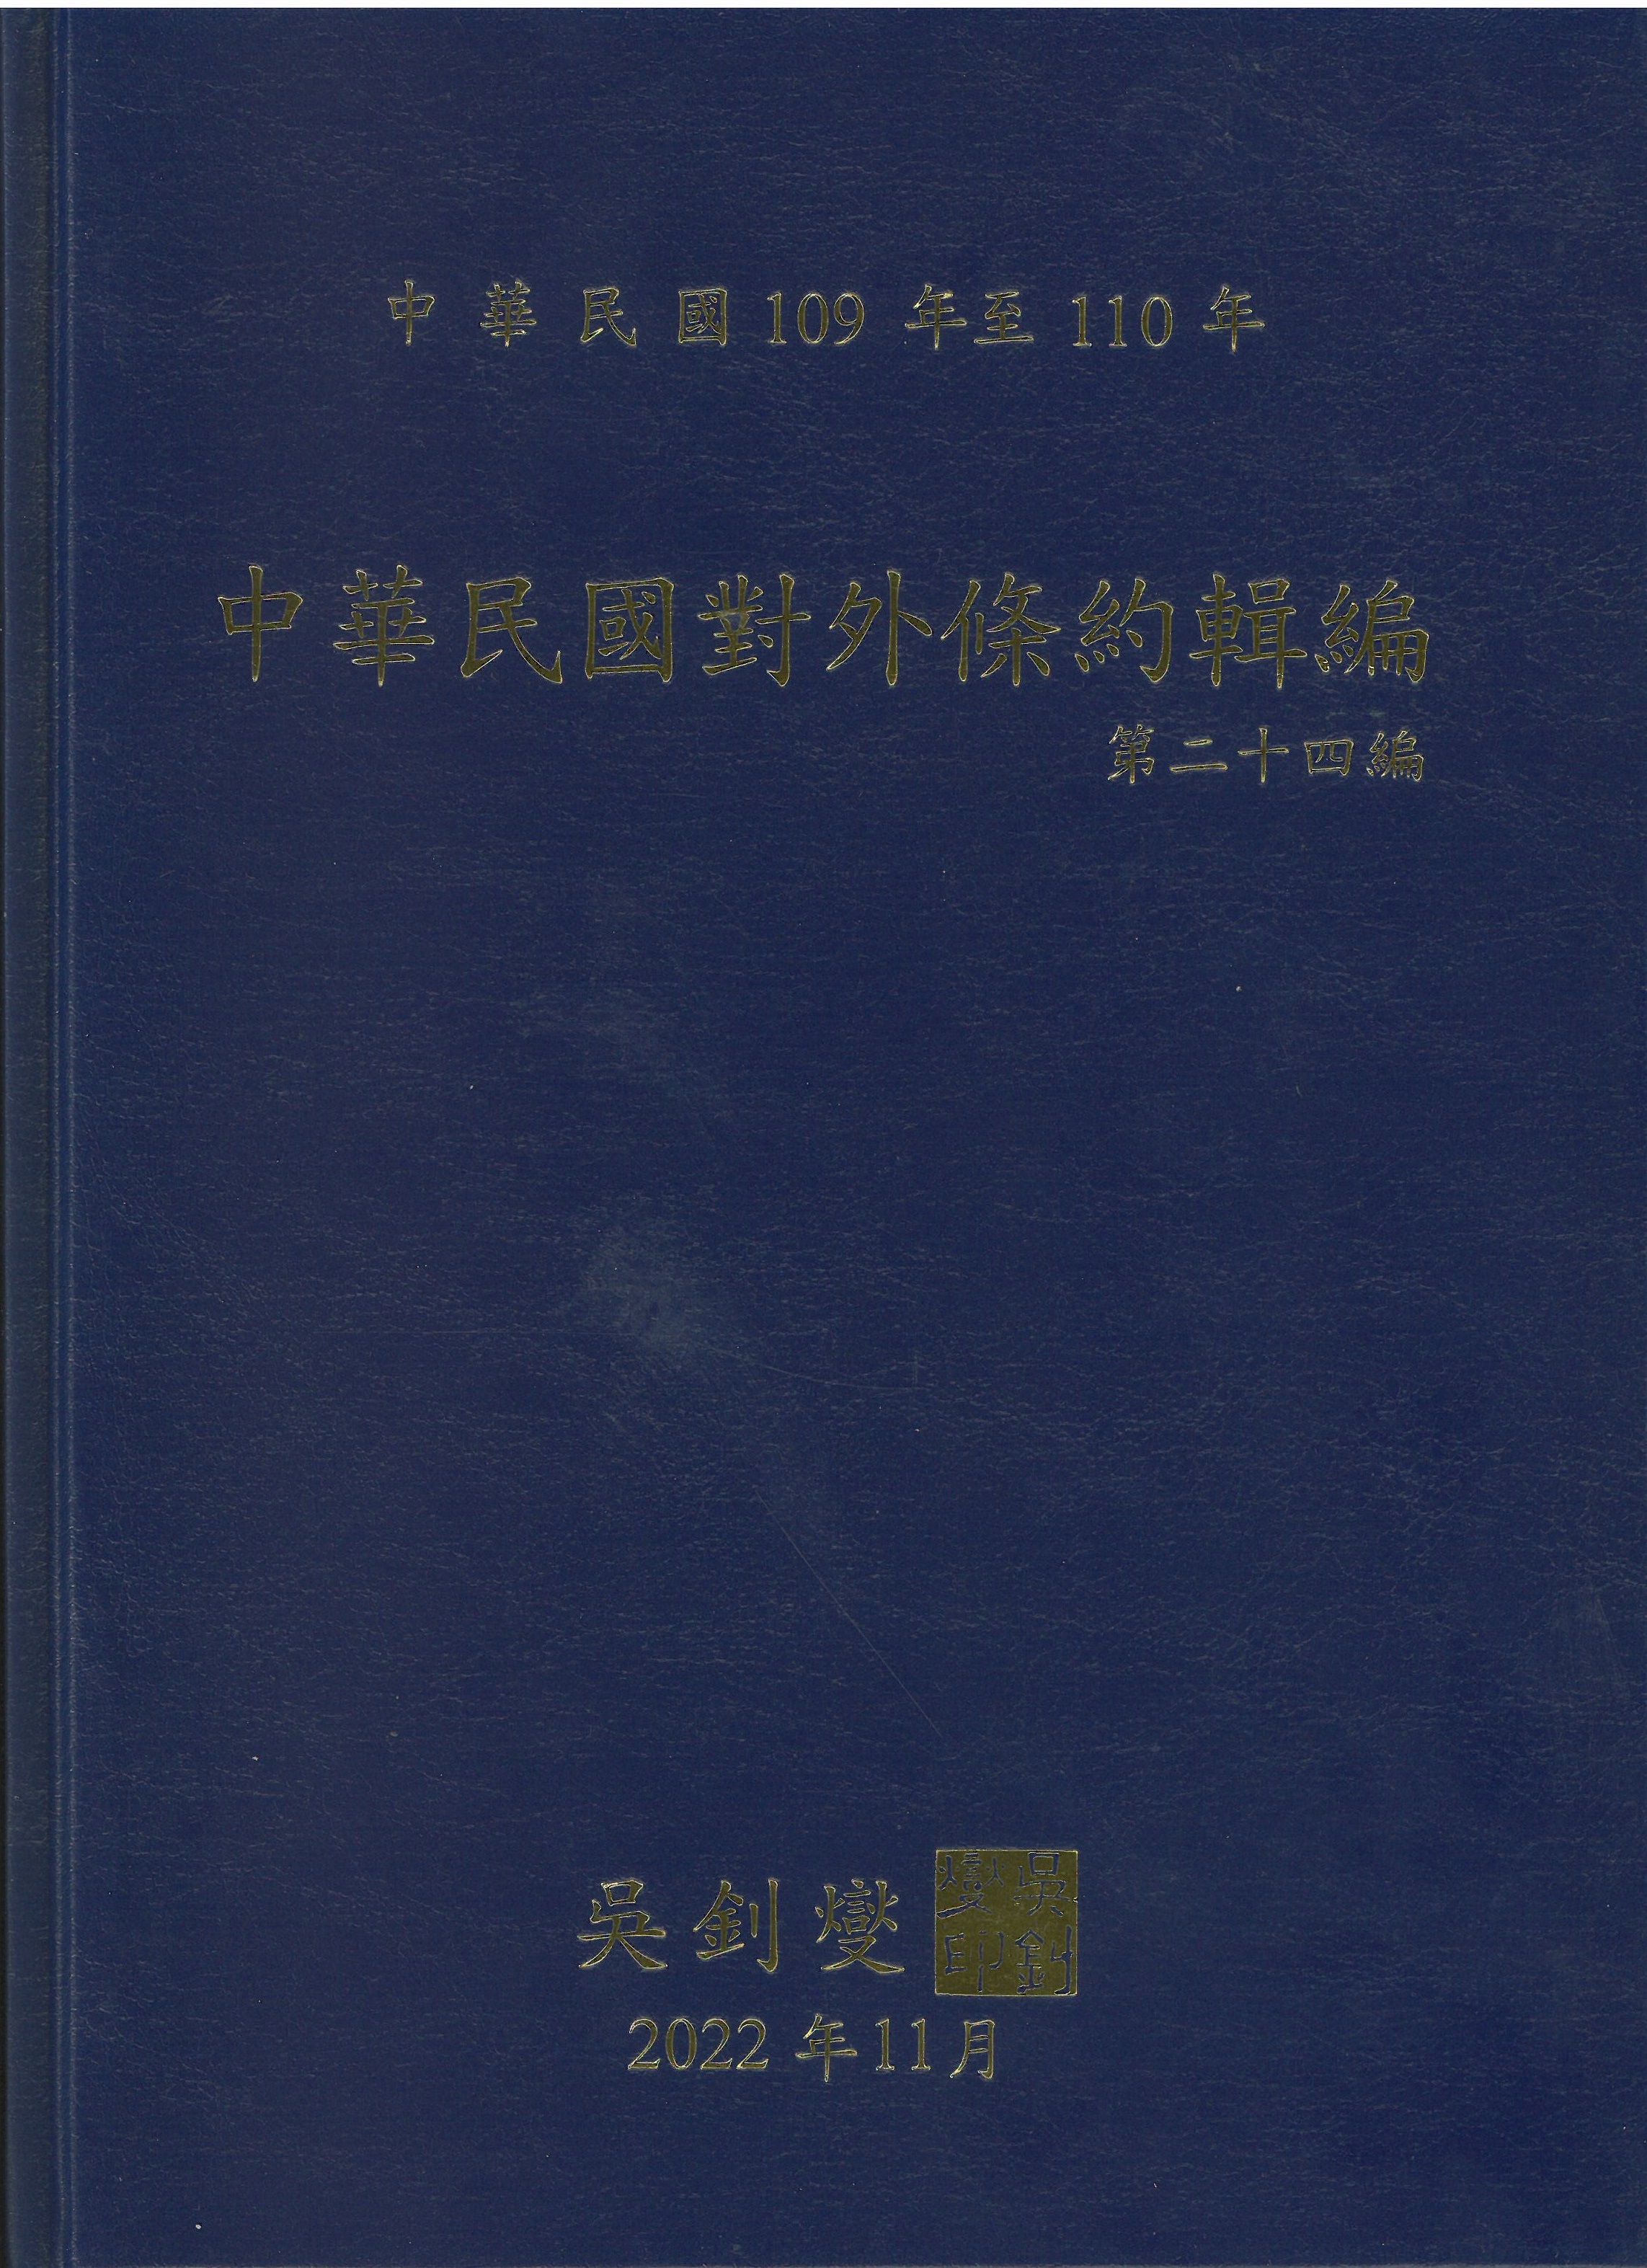 中華民國對外條約輯編 = Treaties between the Republic of China (Taiwan) and foreign states. 第24編, 中華民國109年至110年 